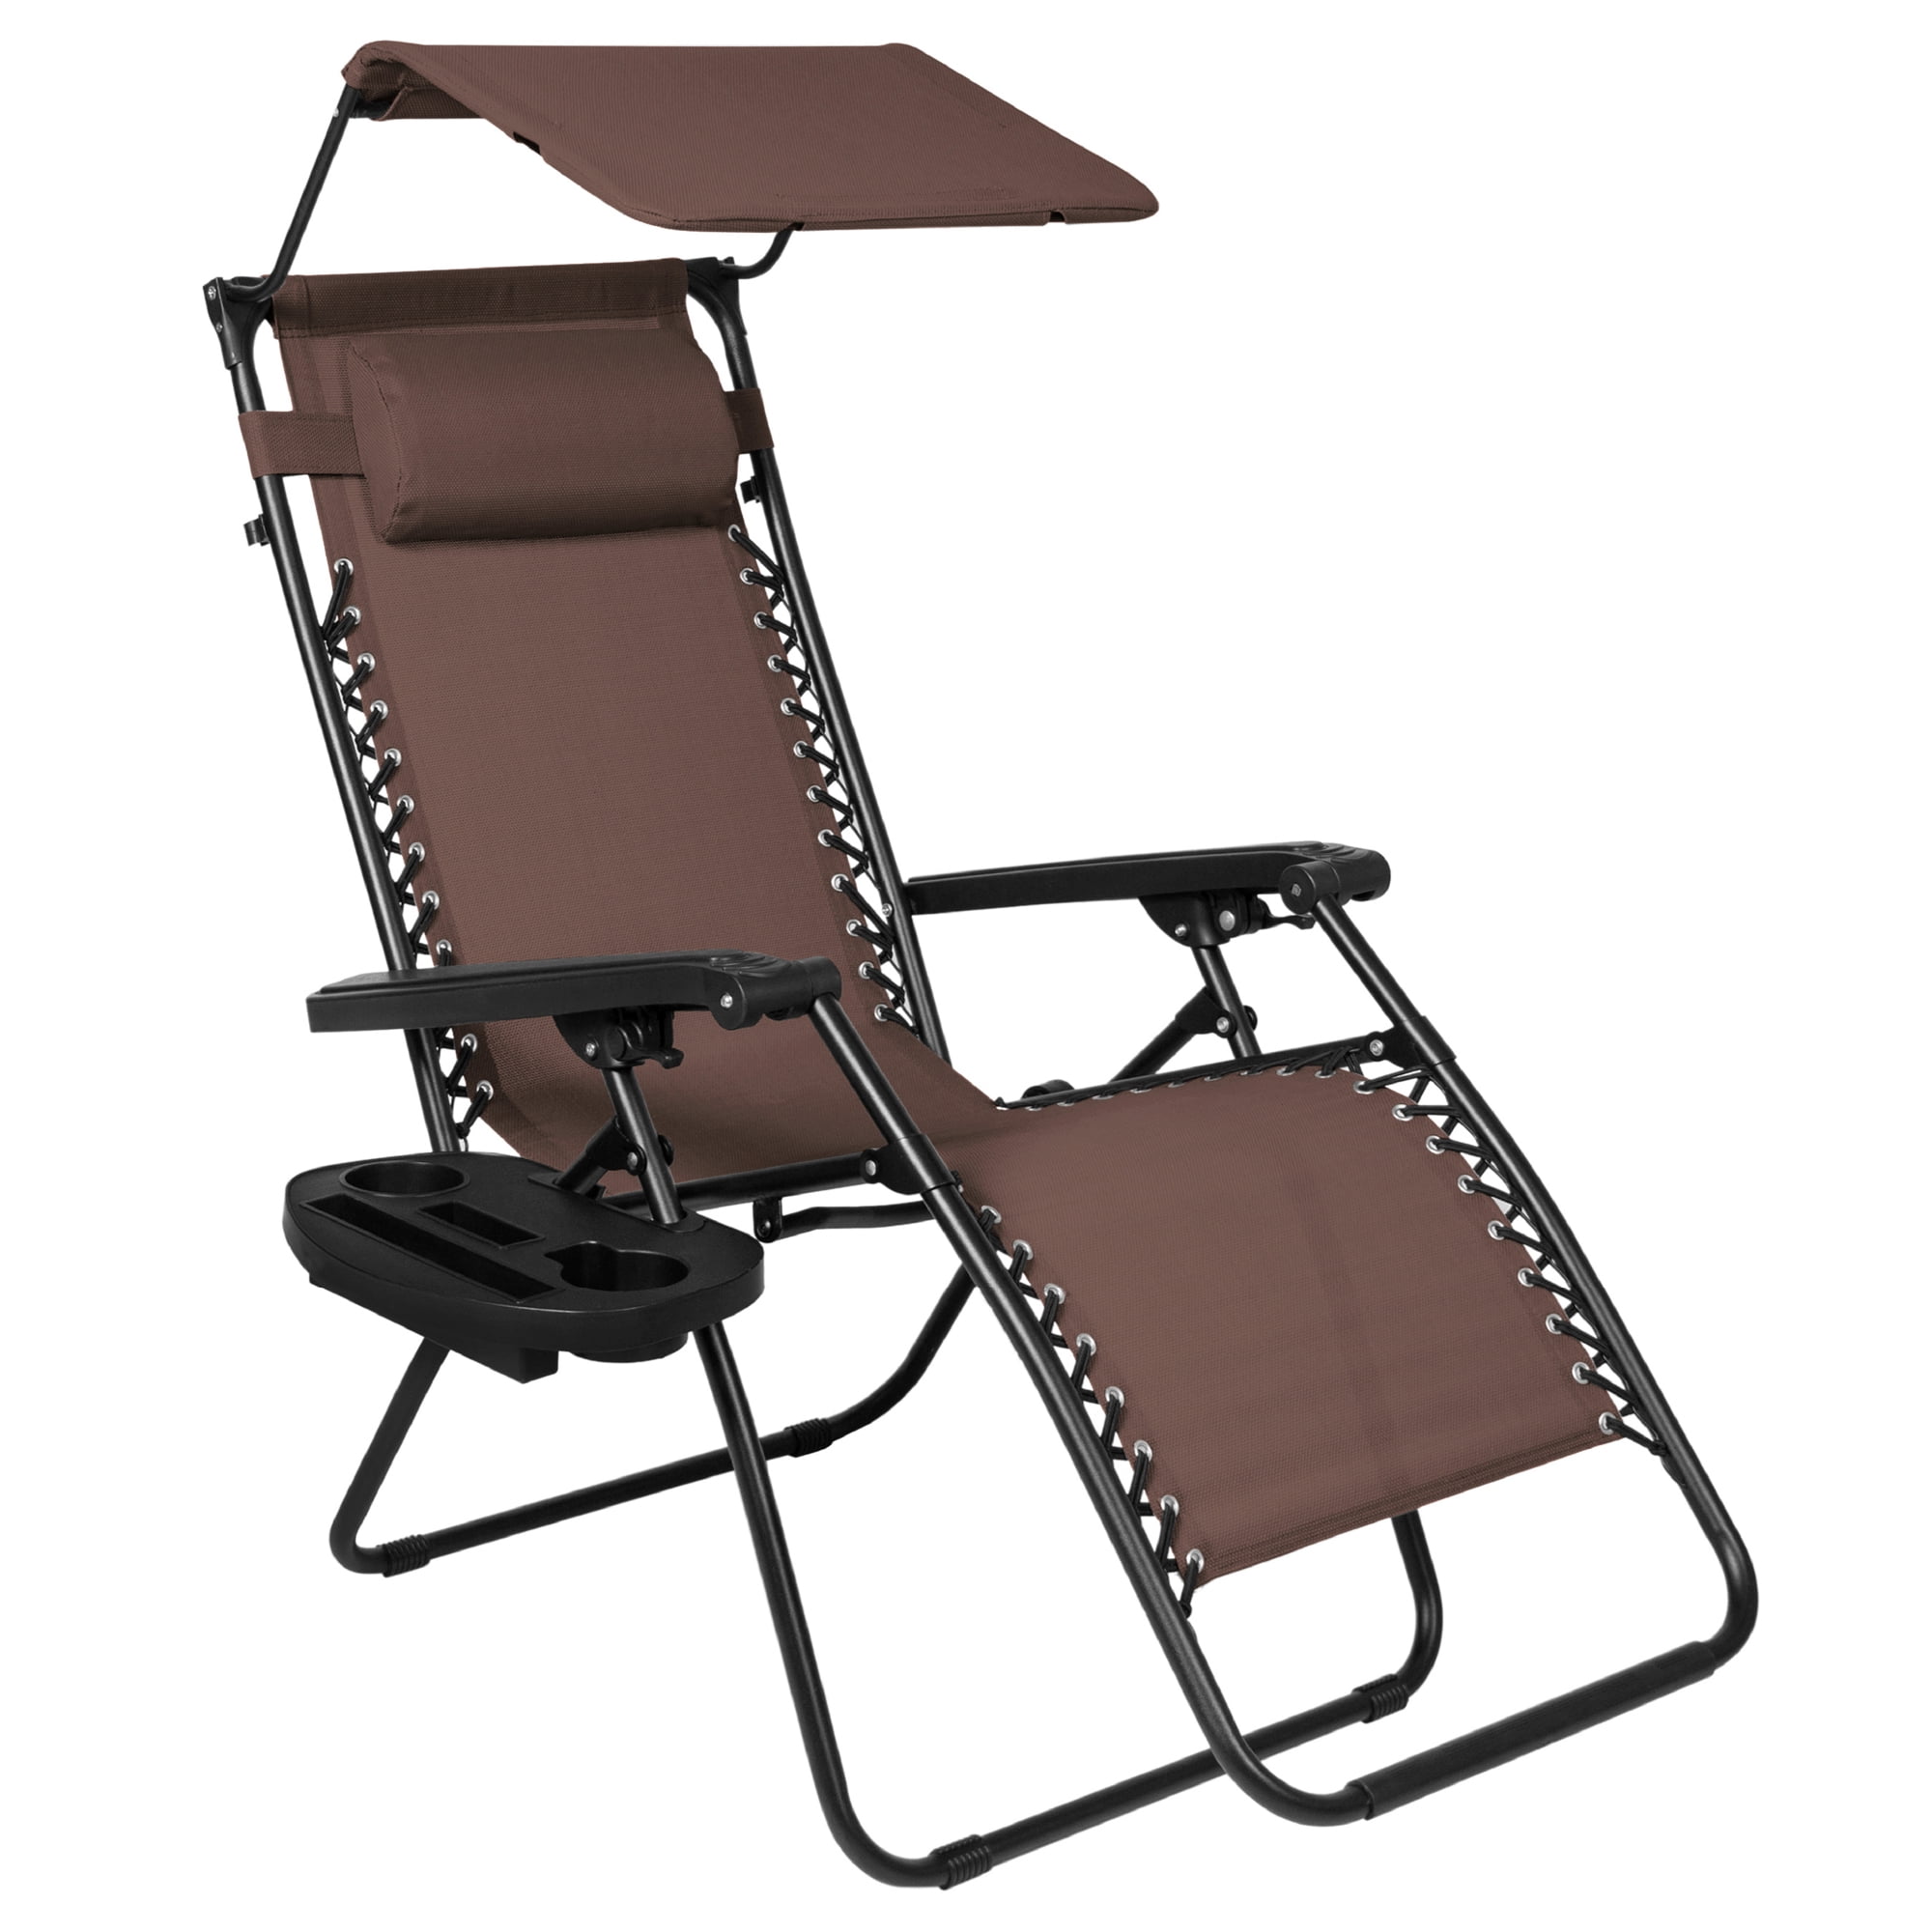 2 Zero Gravity Canopy Reclining Chairs Sun Beach Camping Folding Loung W/Trays 